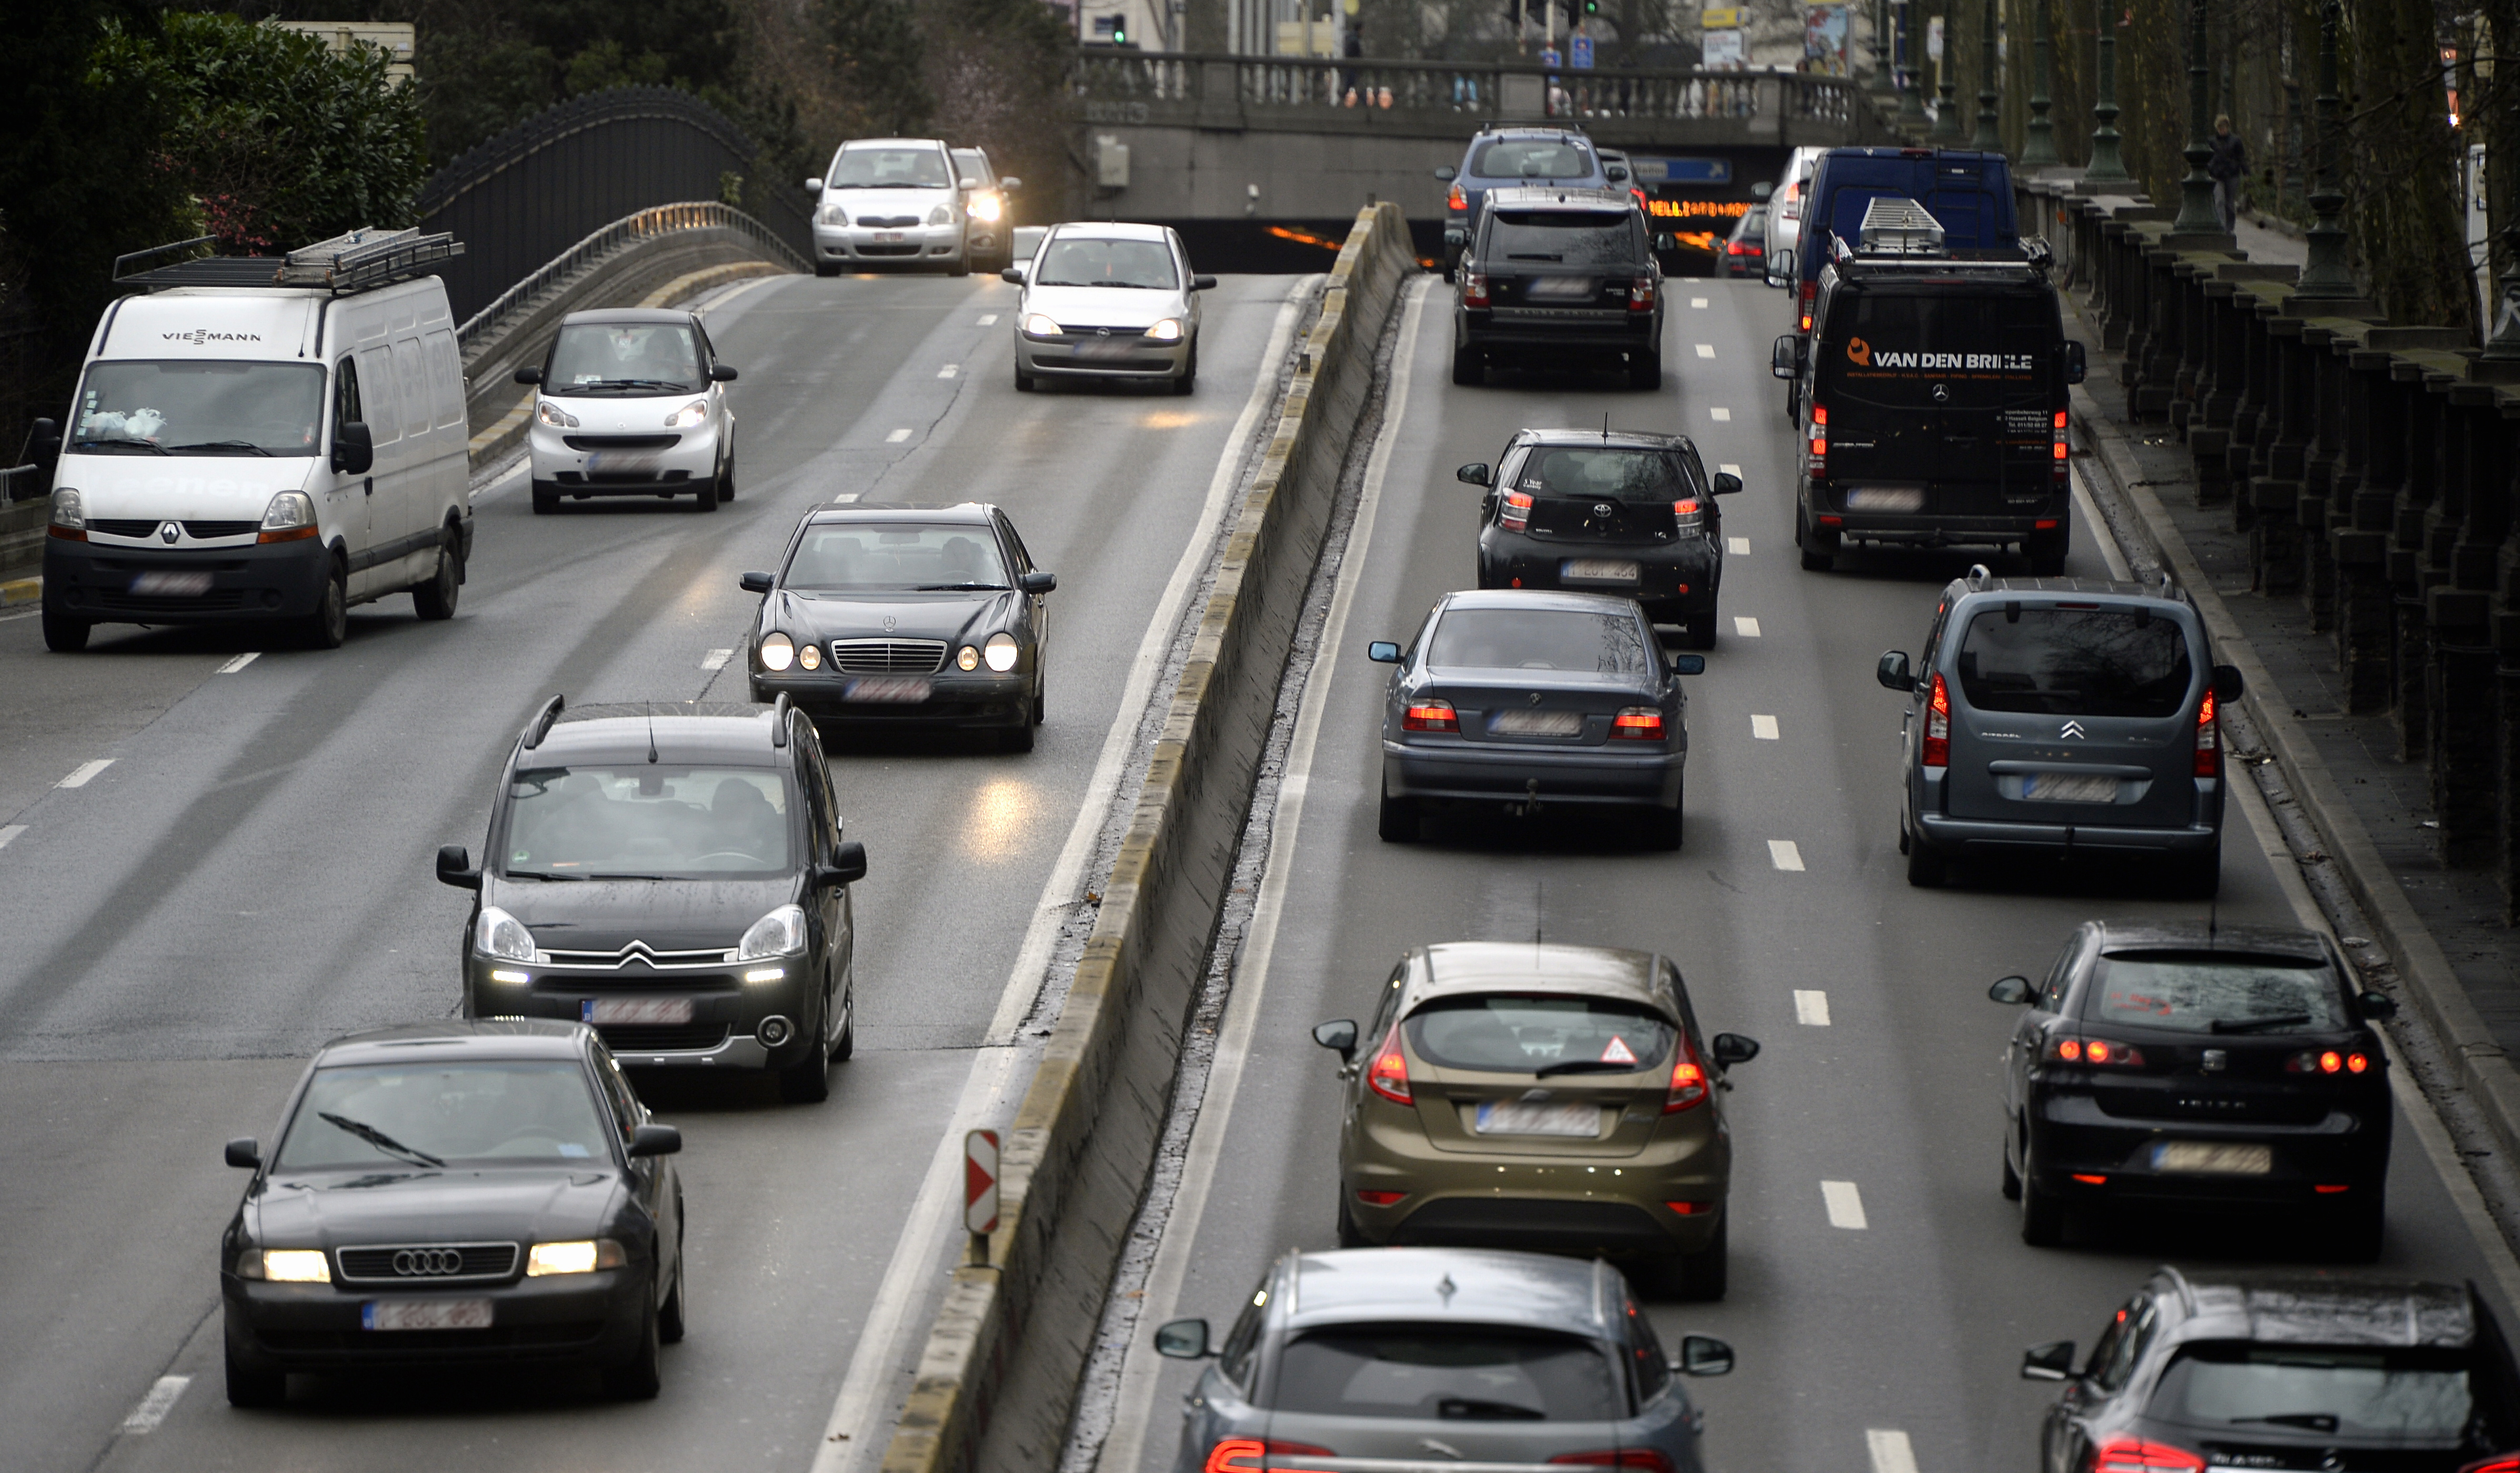 Brussels has ‘alternative’ congestion tax plan in the pipeline